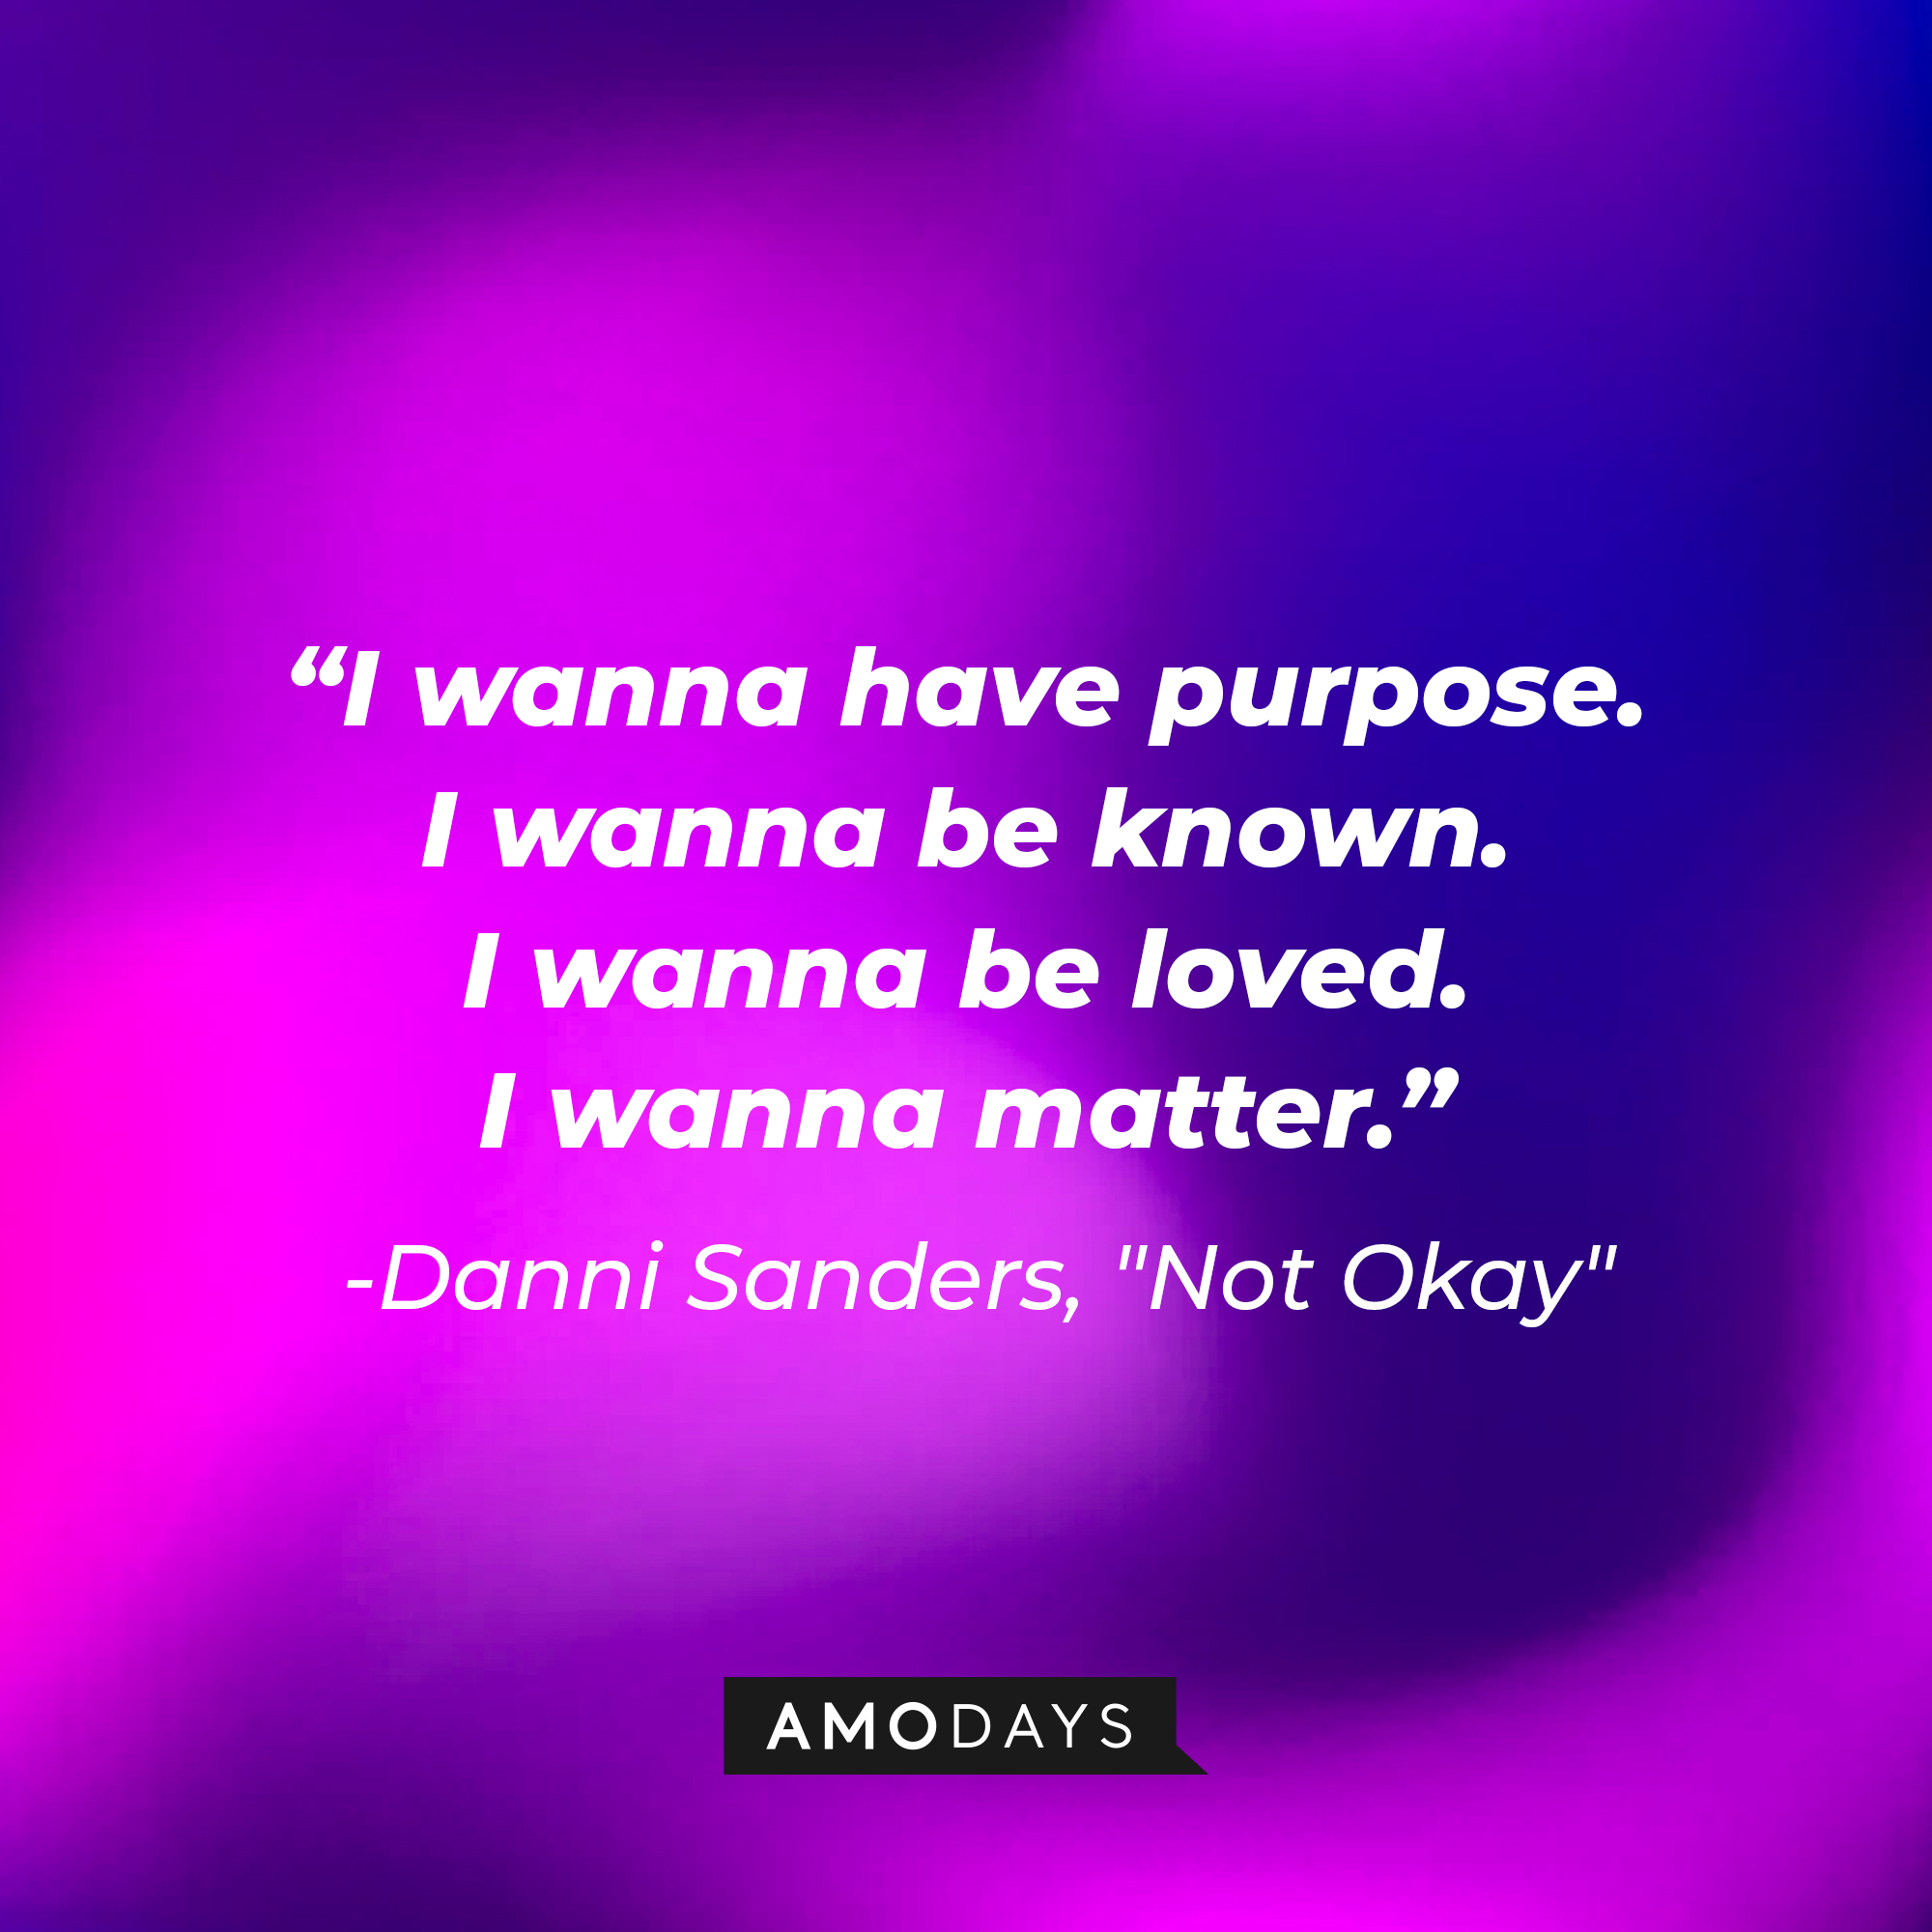 Danni Sanders' quote: "I wanna have purpose. I wanna be known. I wanna be loved. I wanna matter." | Source: AmoDays